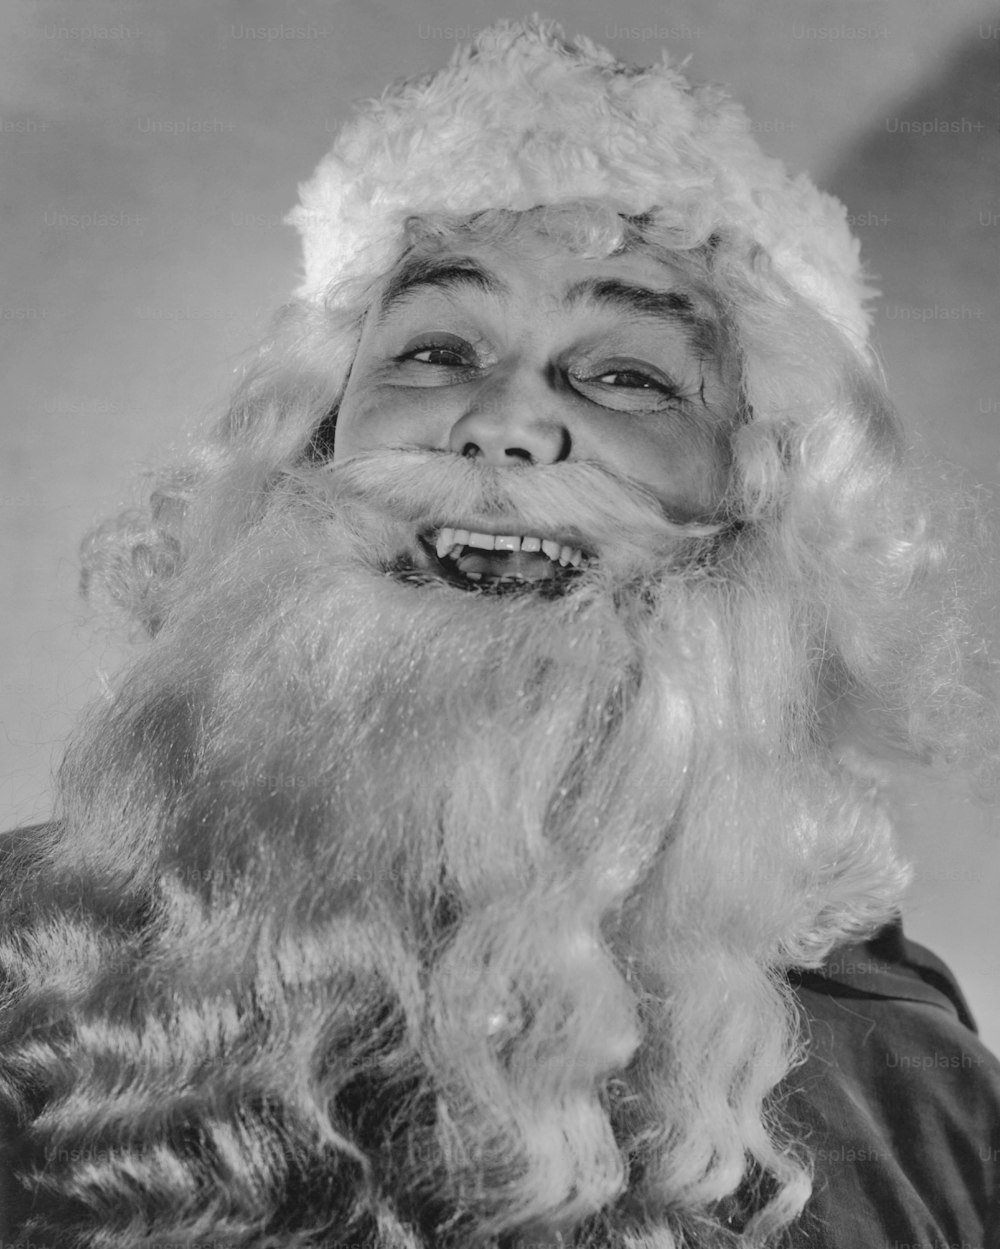 Papai Noel rindo em 1935. (Foto: Keystone View/FPG/Getty Images)